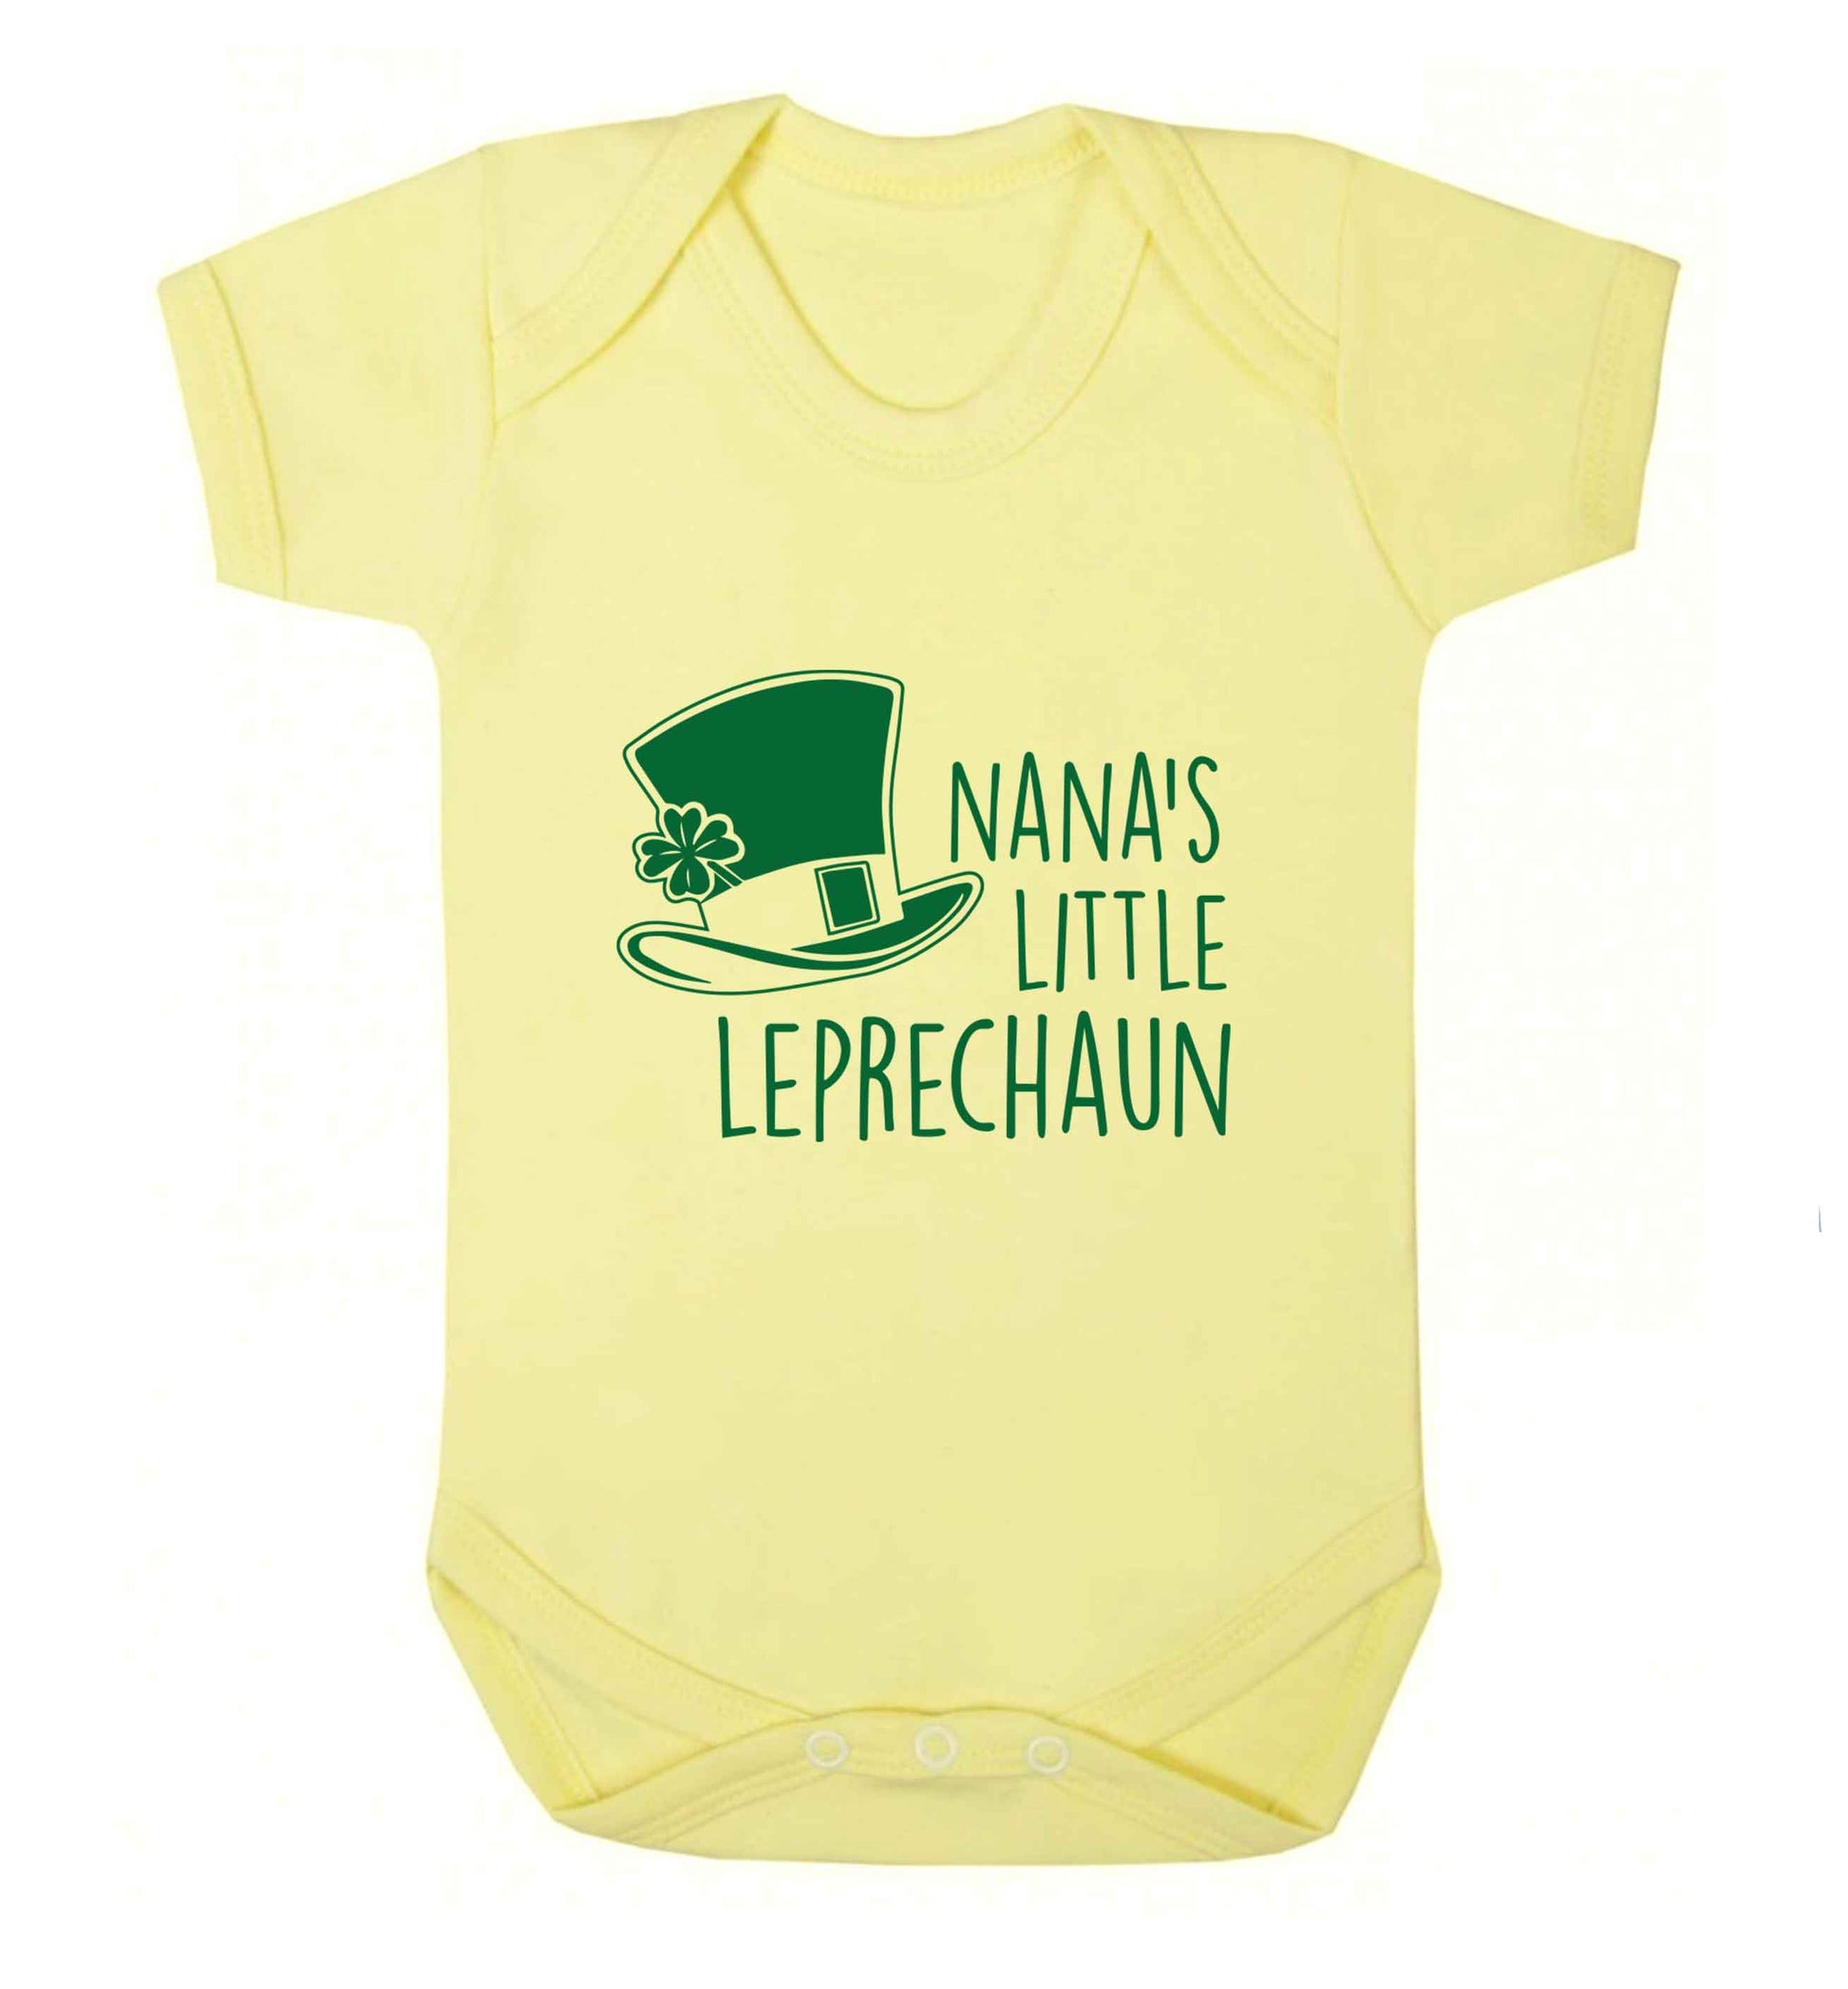 Nana's little leprechaun baby vest pale yellow 18-24 months